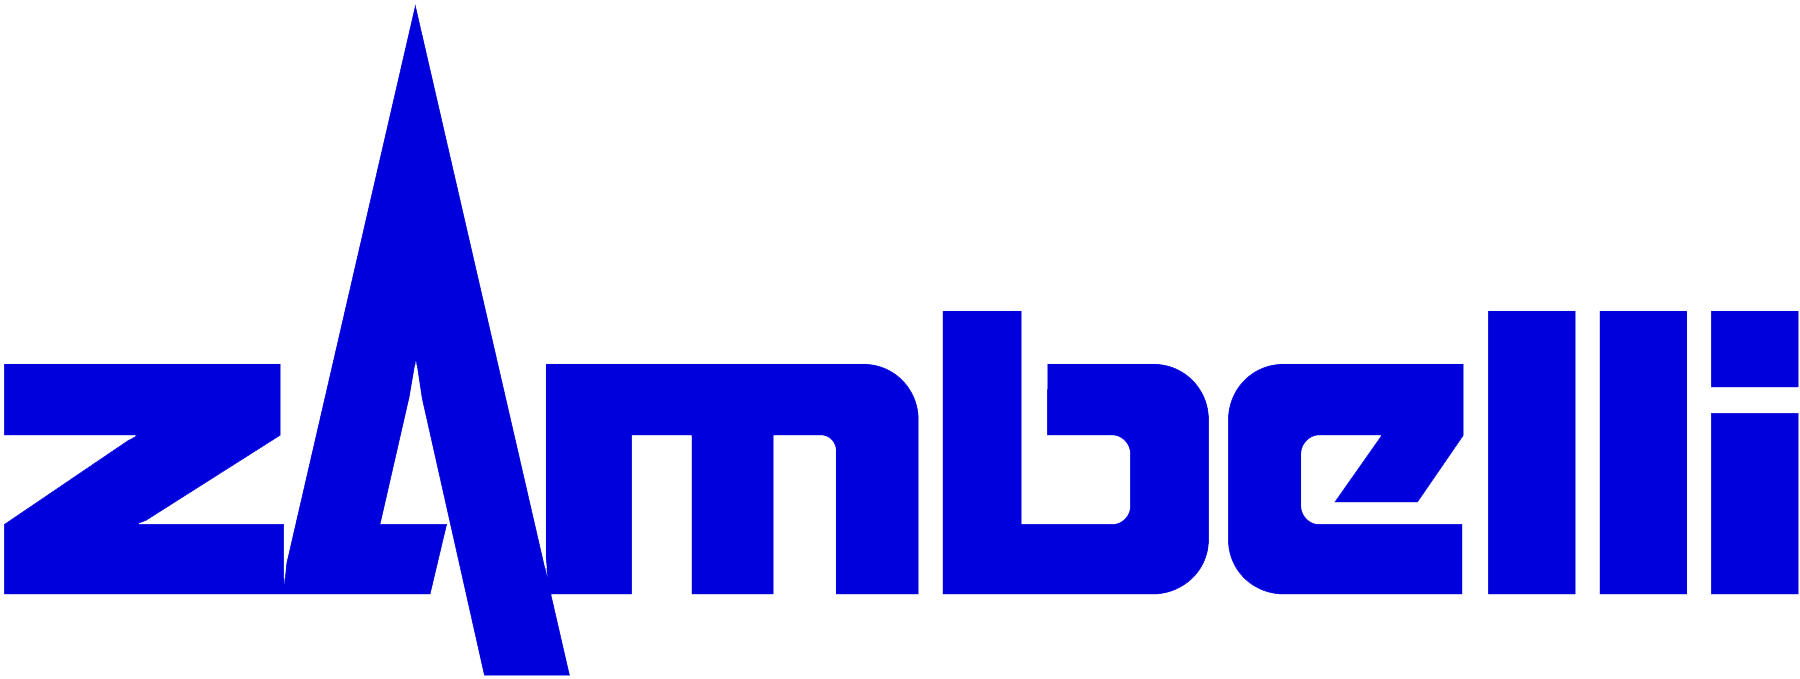 Zambelli_Logo copy